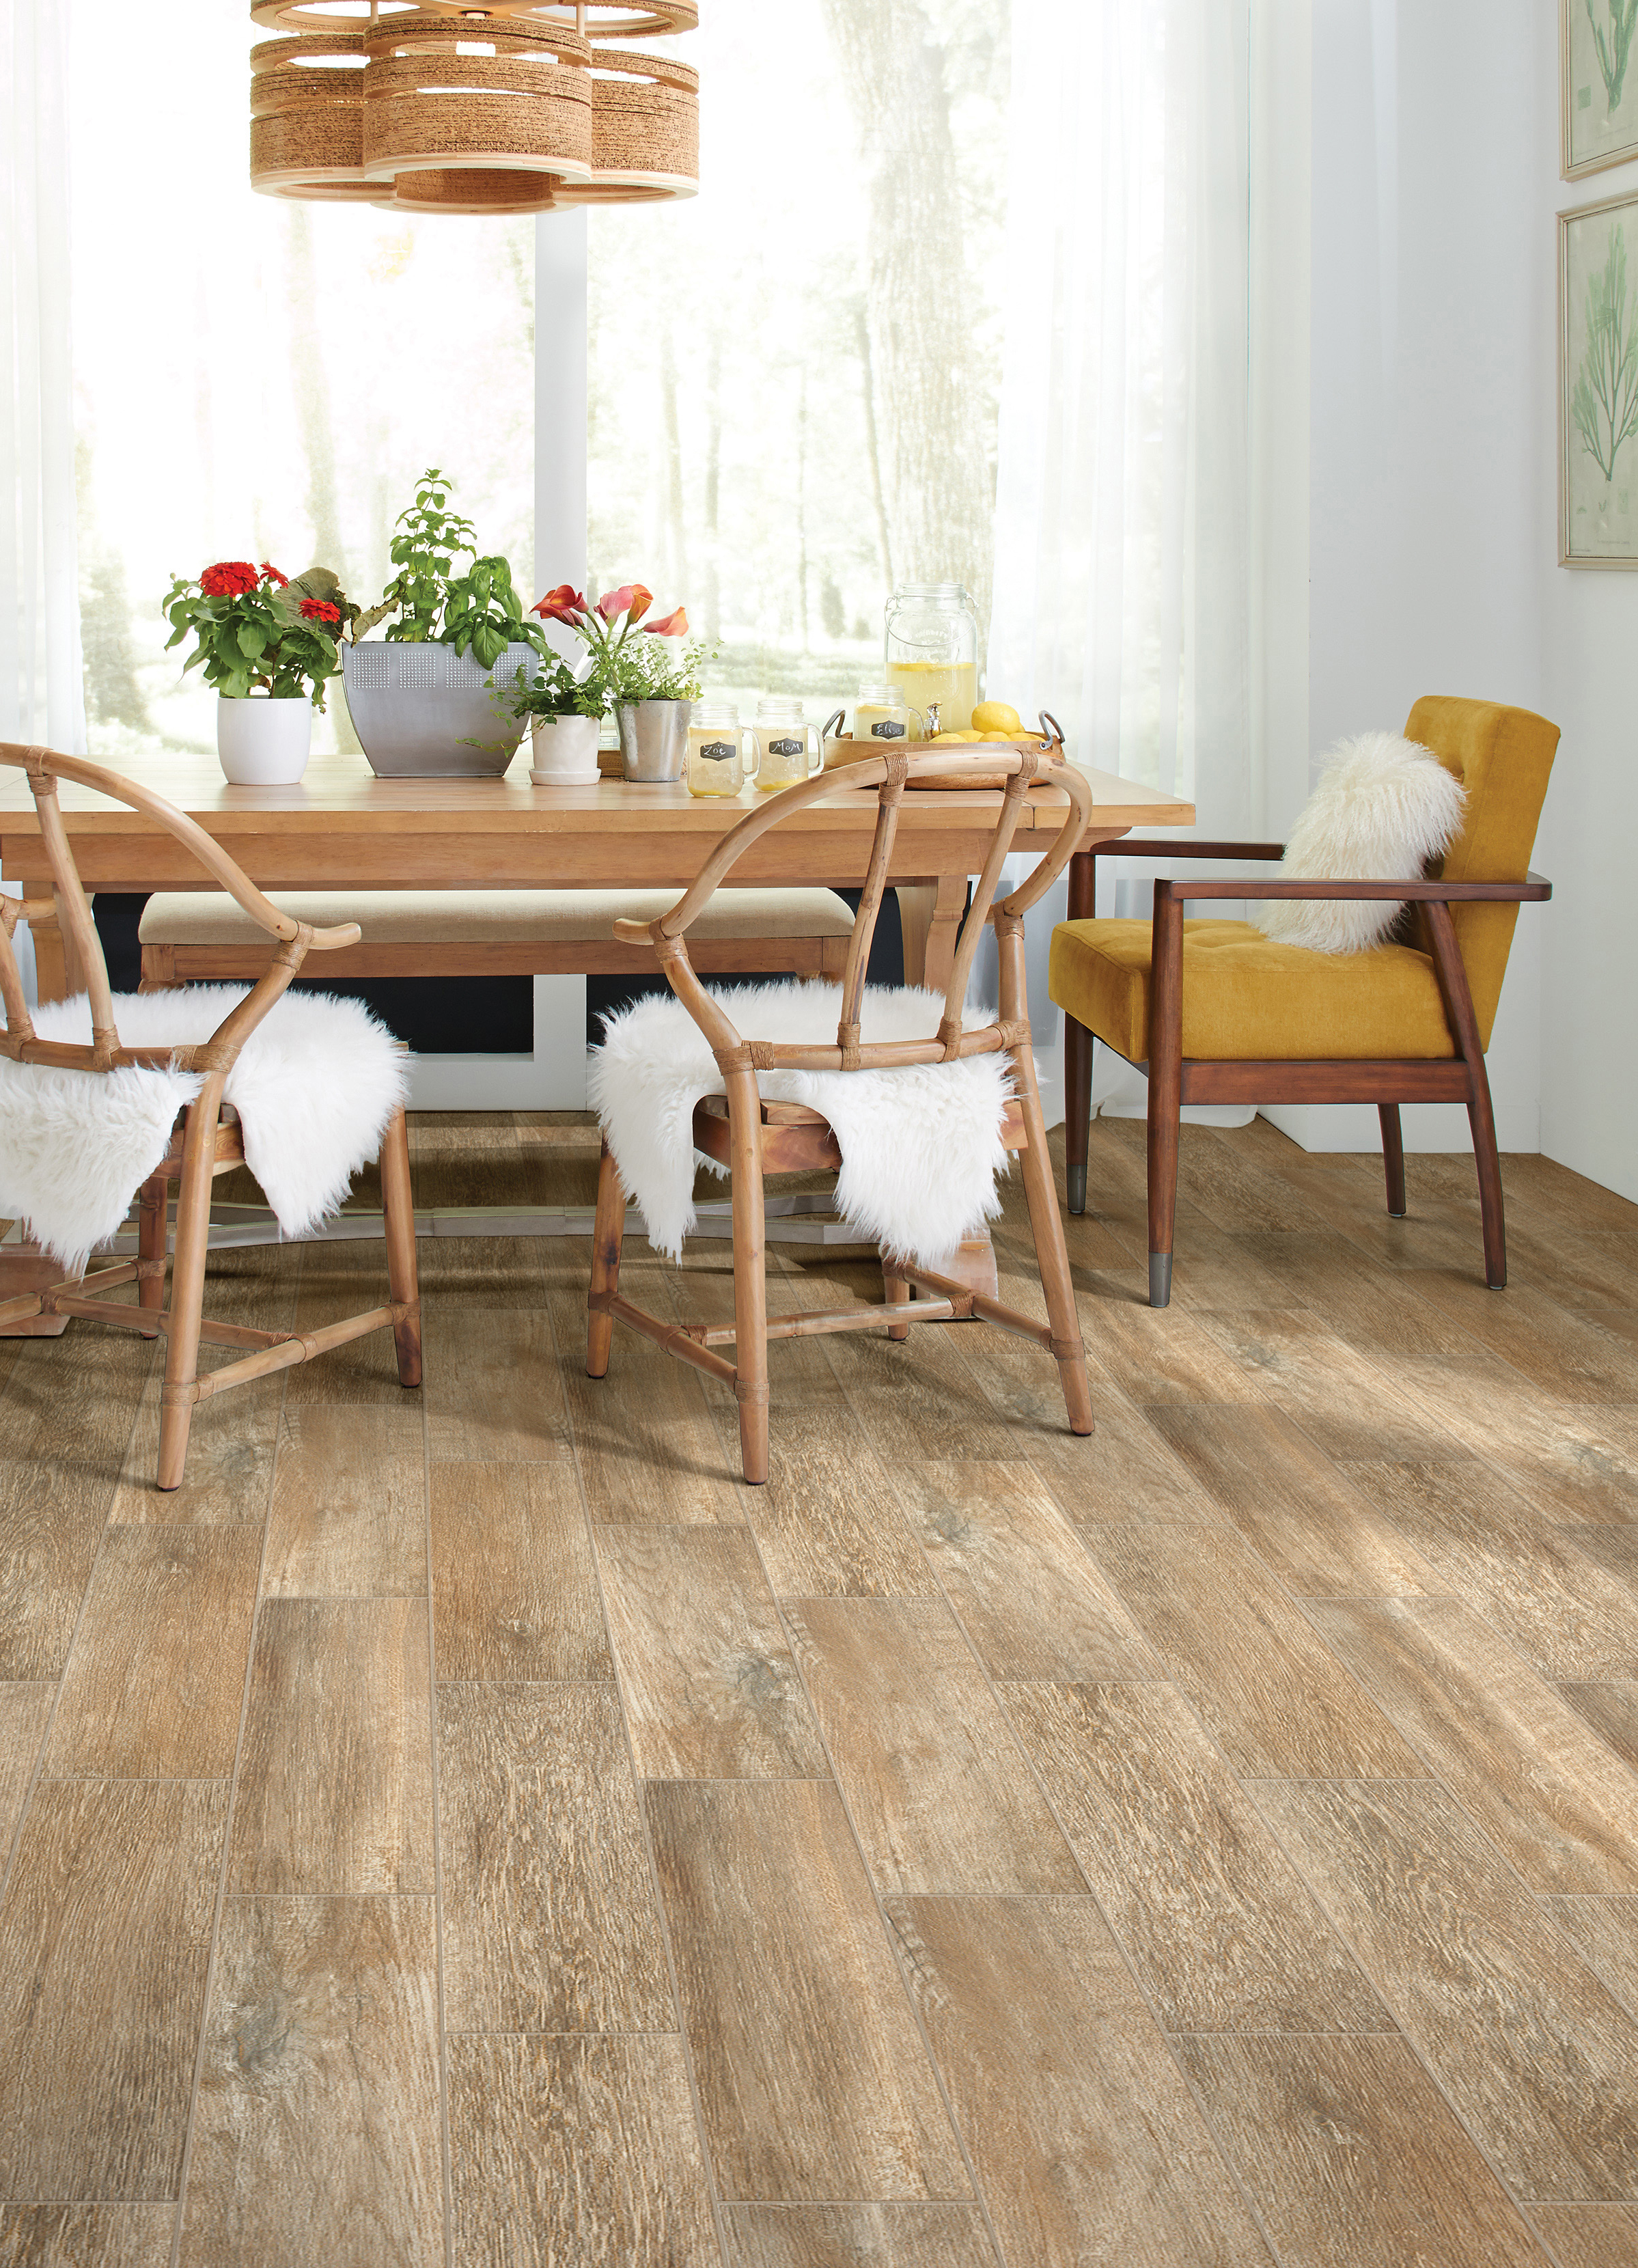 wood-look tile flooring in a dining room